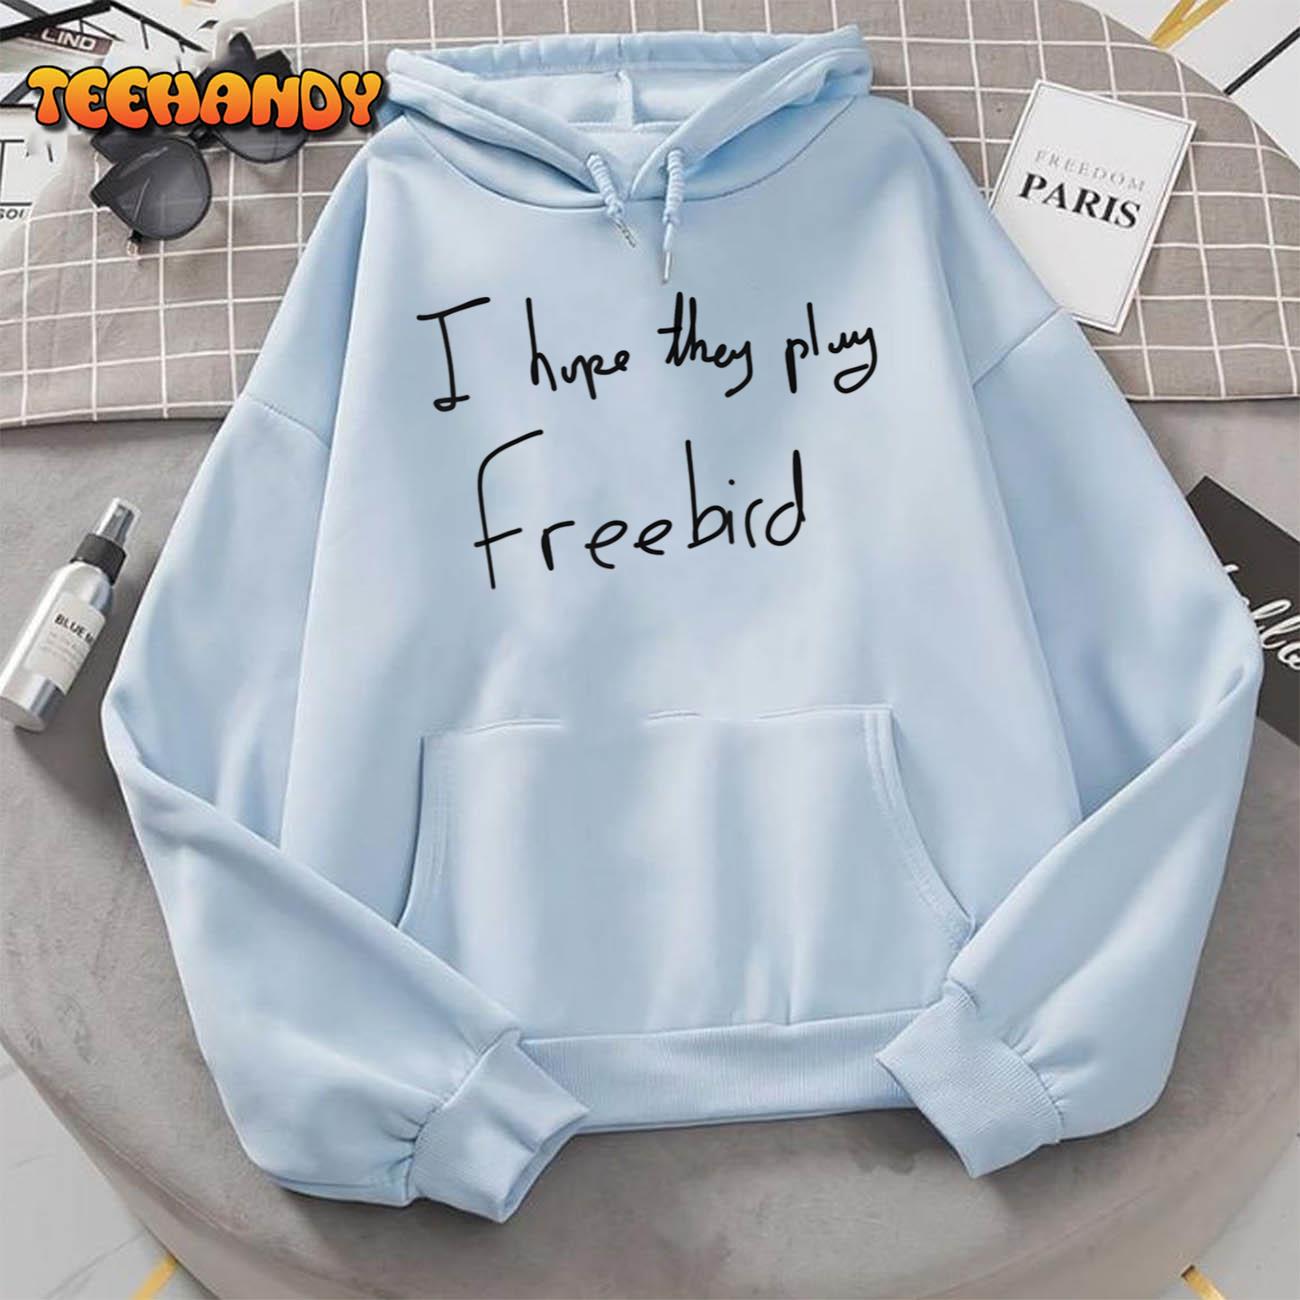 I Hope They Play Freebird T-Shirt